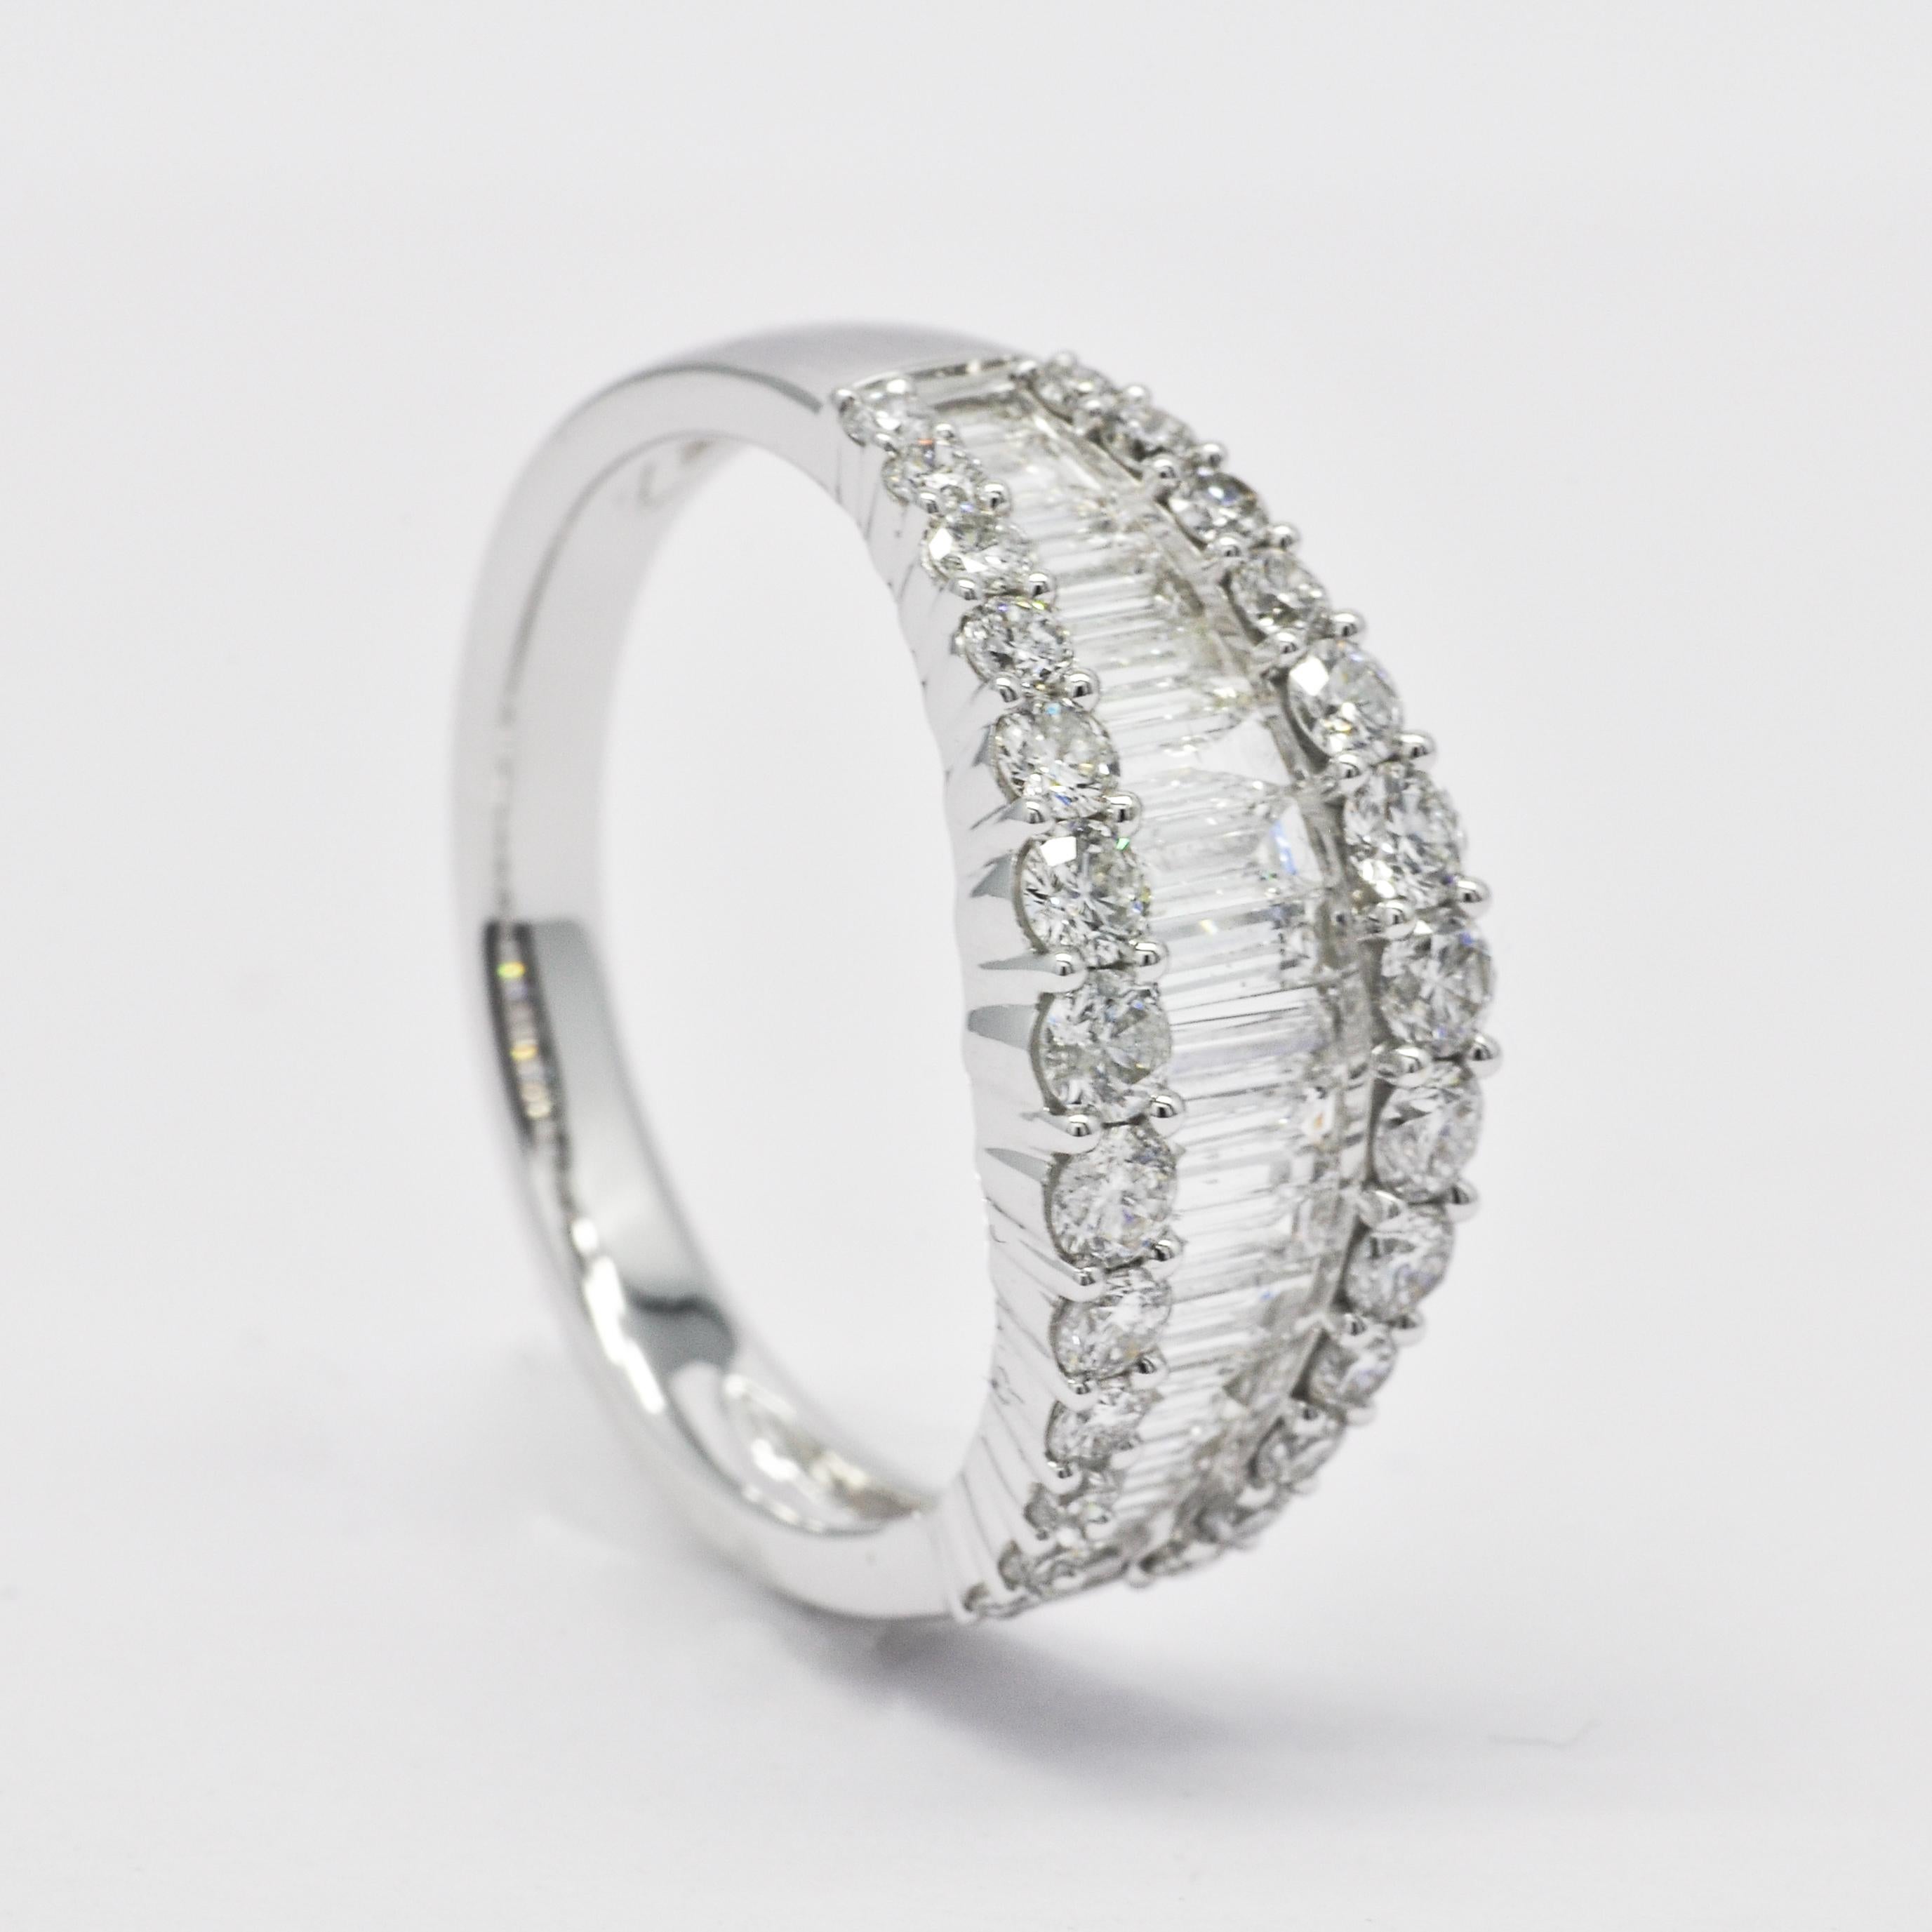 For Sale:  Natural Diamond Ring 1.45 cts 18 Karat White Gold Wedding Anniversary Band 2